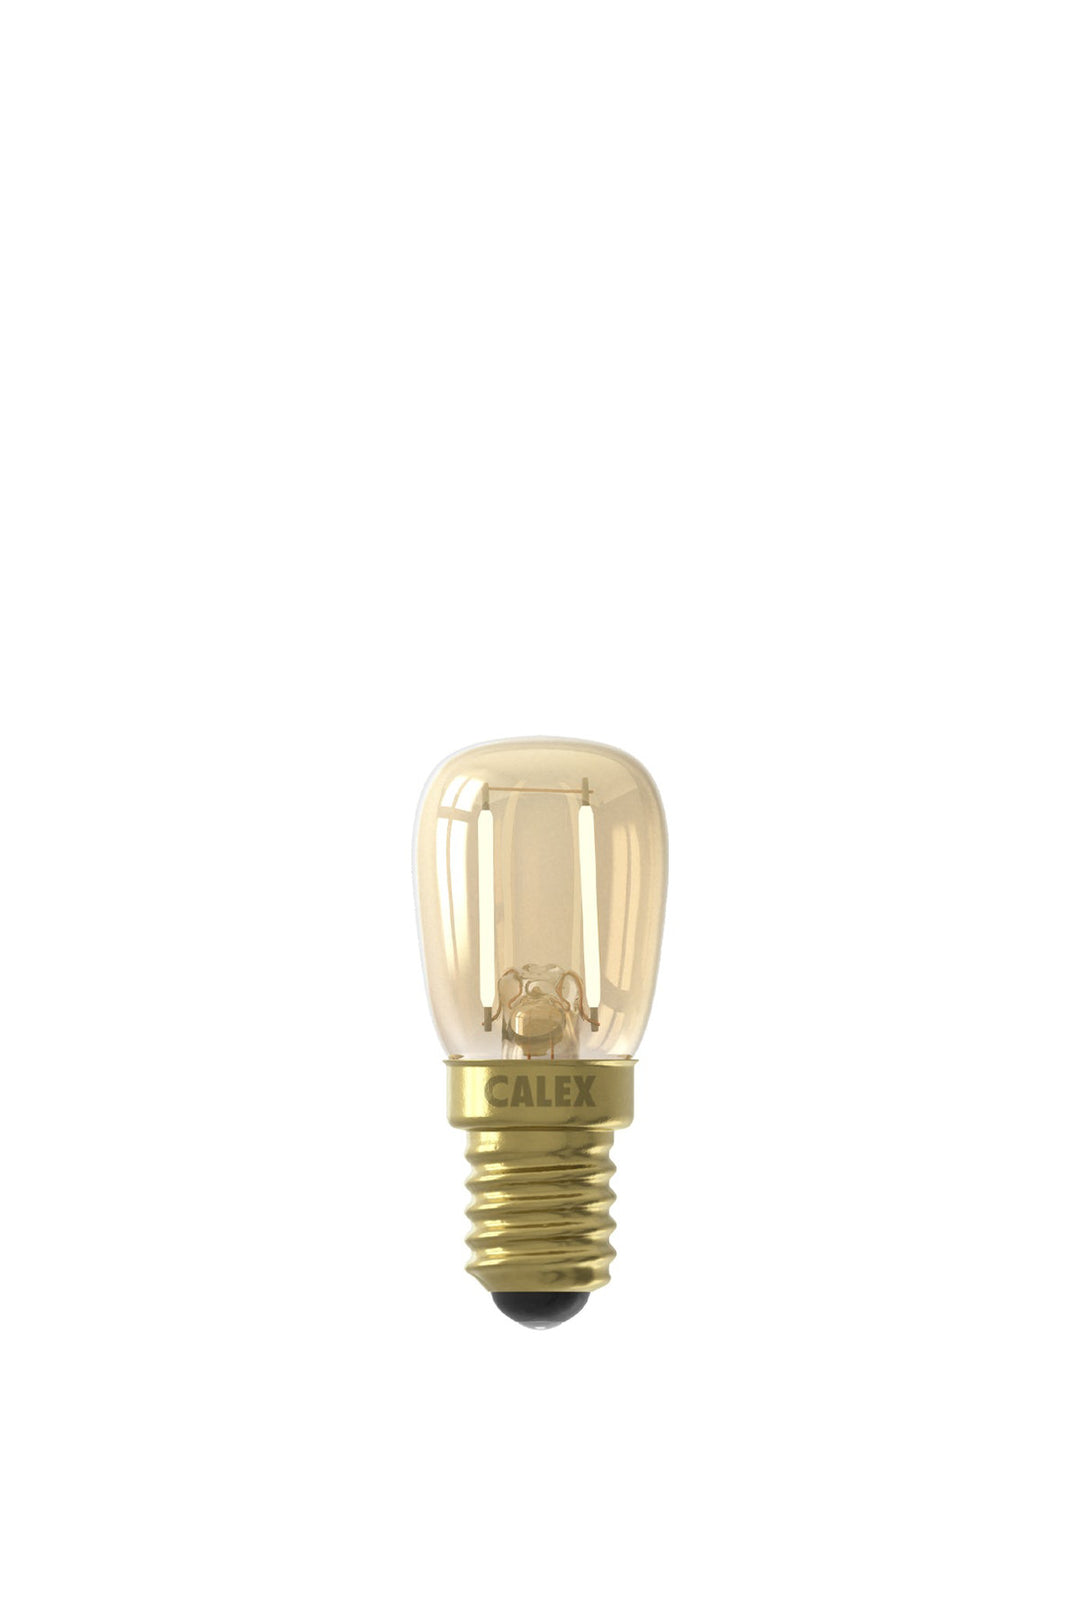 Calex LED Warm Filament Pilot Lamp T26, Gold, E27, Non-Dimmable 1101000500